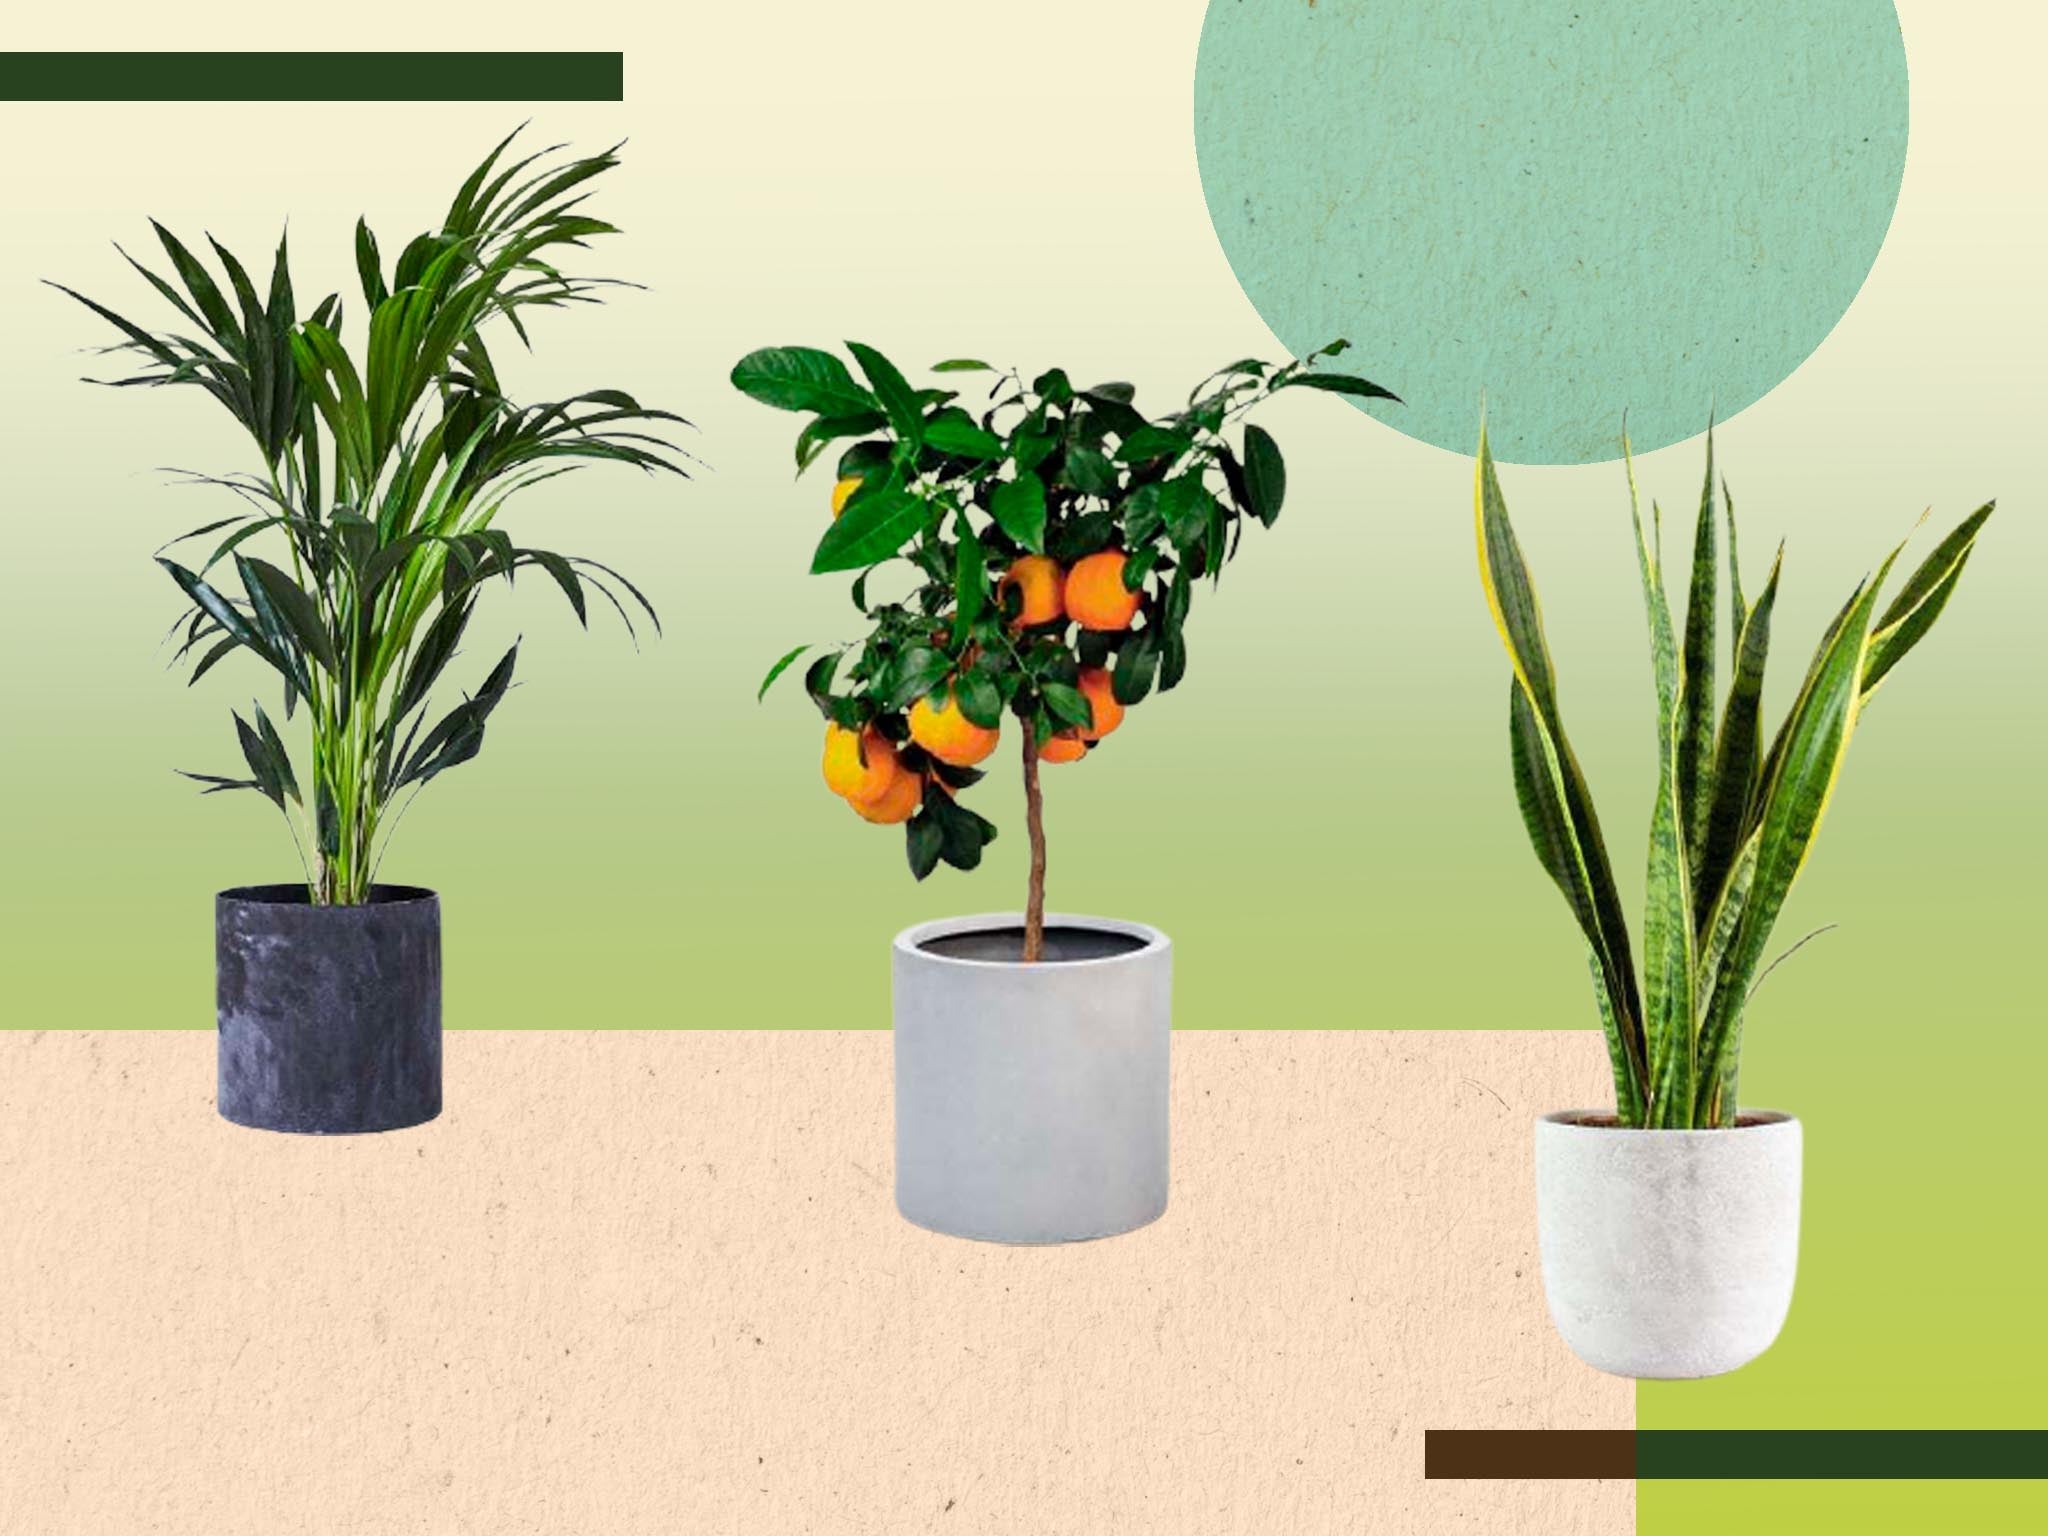 best places to buy plants 2022: online garden centres, nurseries